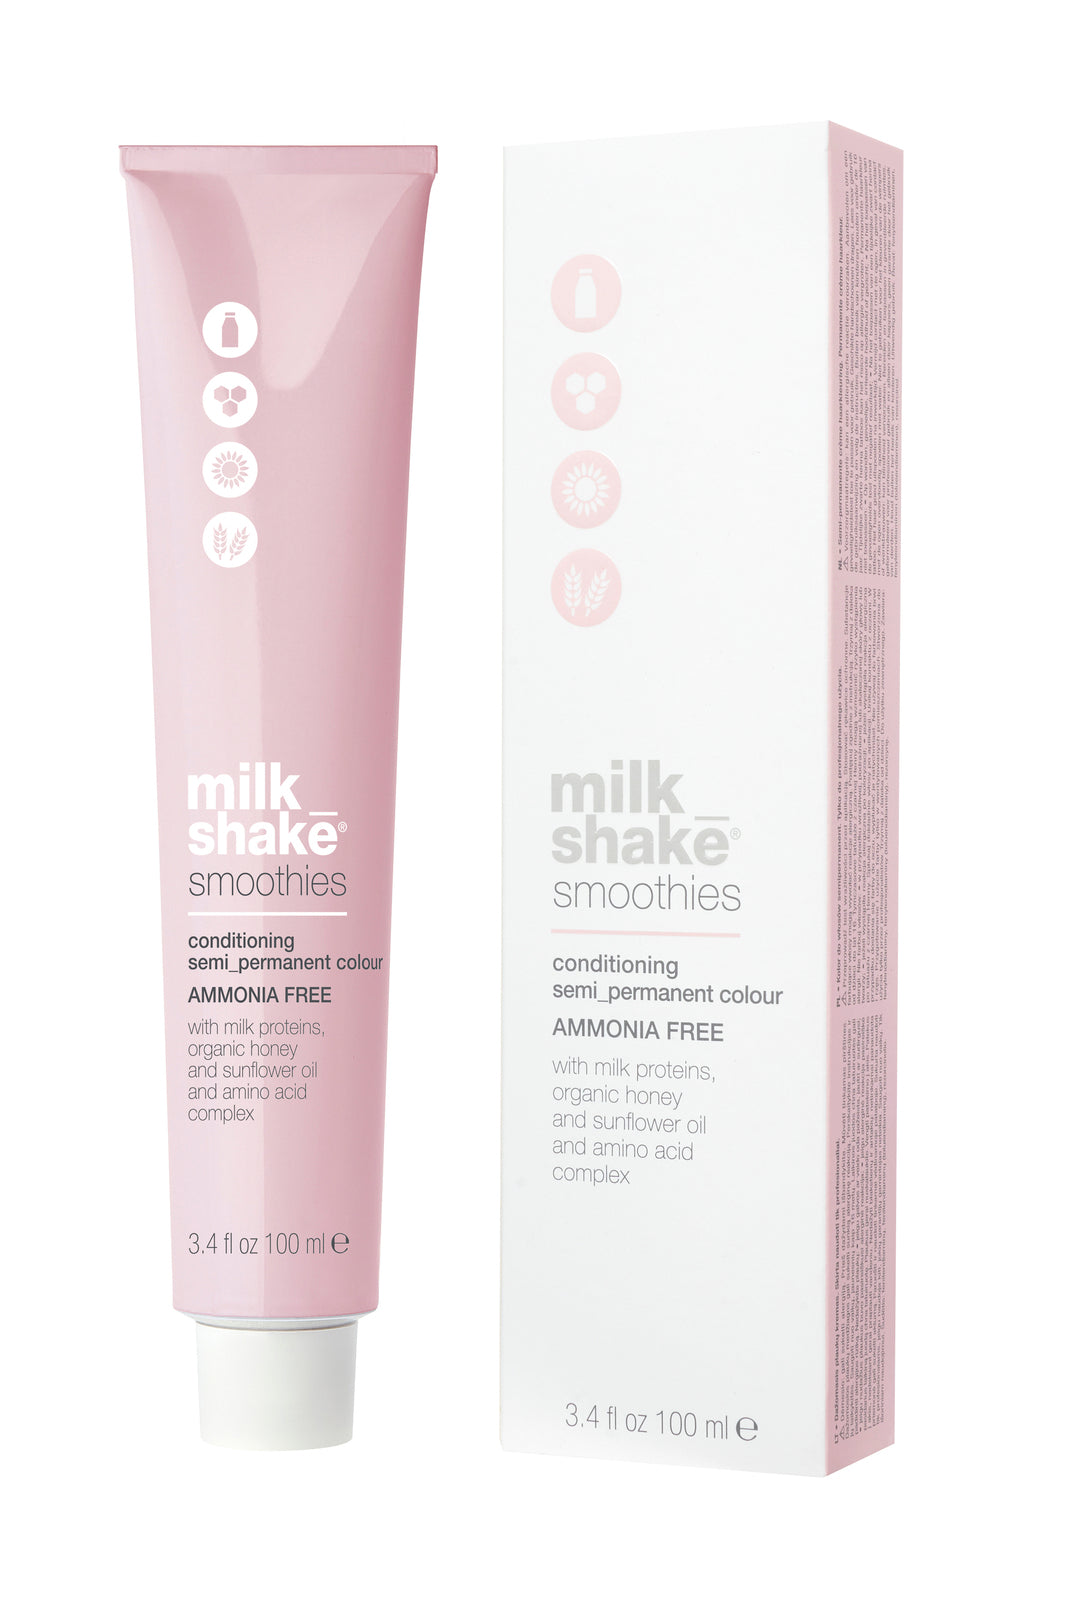 Milkshake smoothies semi-permanent color ANTHRACITE